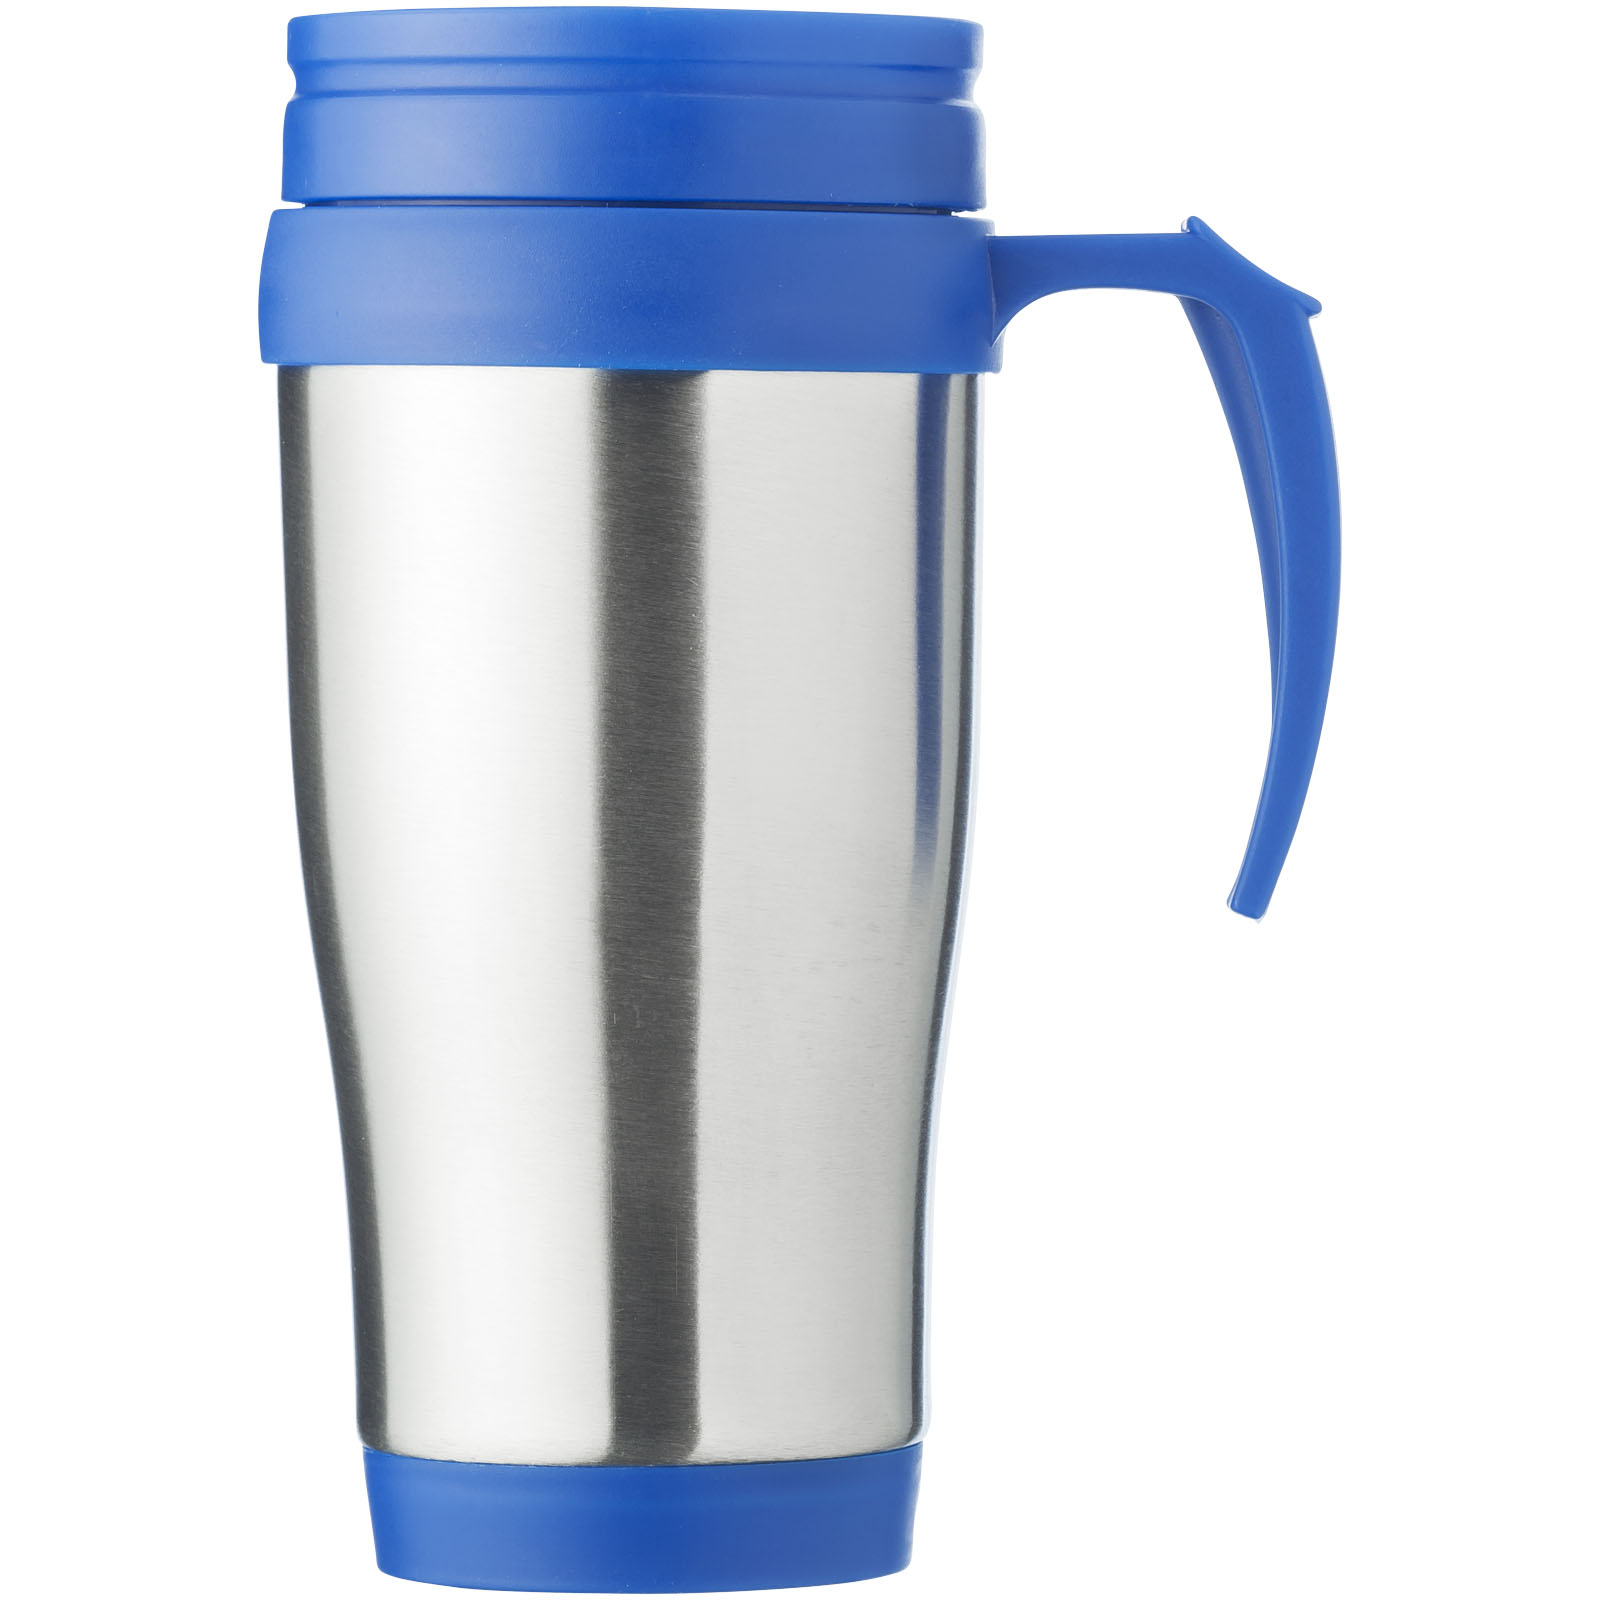 Advertising Insulated mugs - Sanibel 400 ml insulated mug - 1